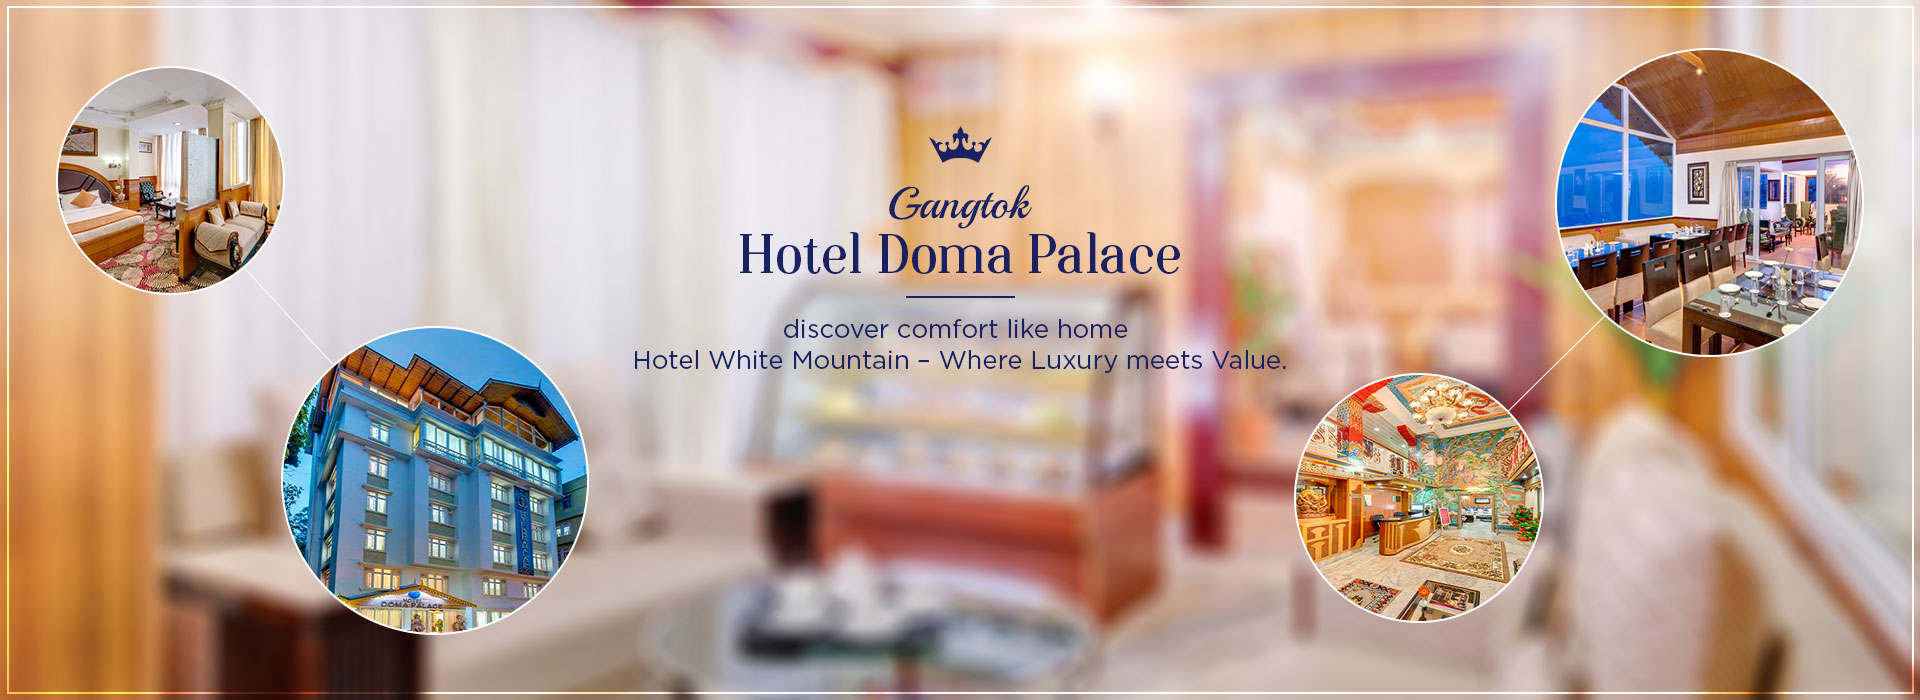 Doma Palace Hotels Group